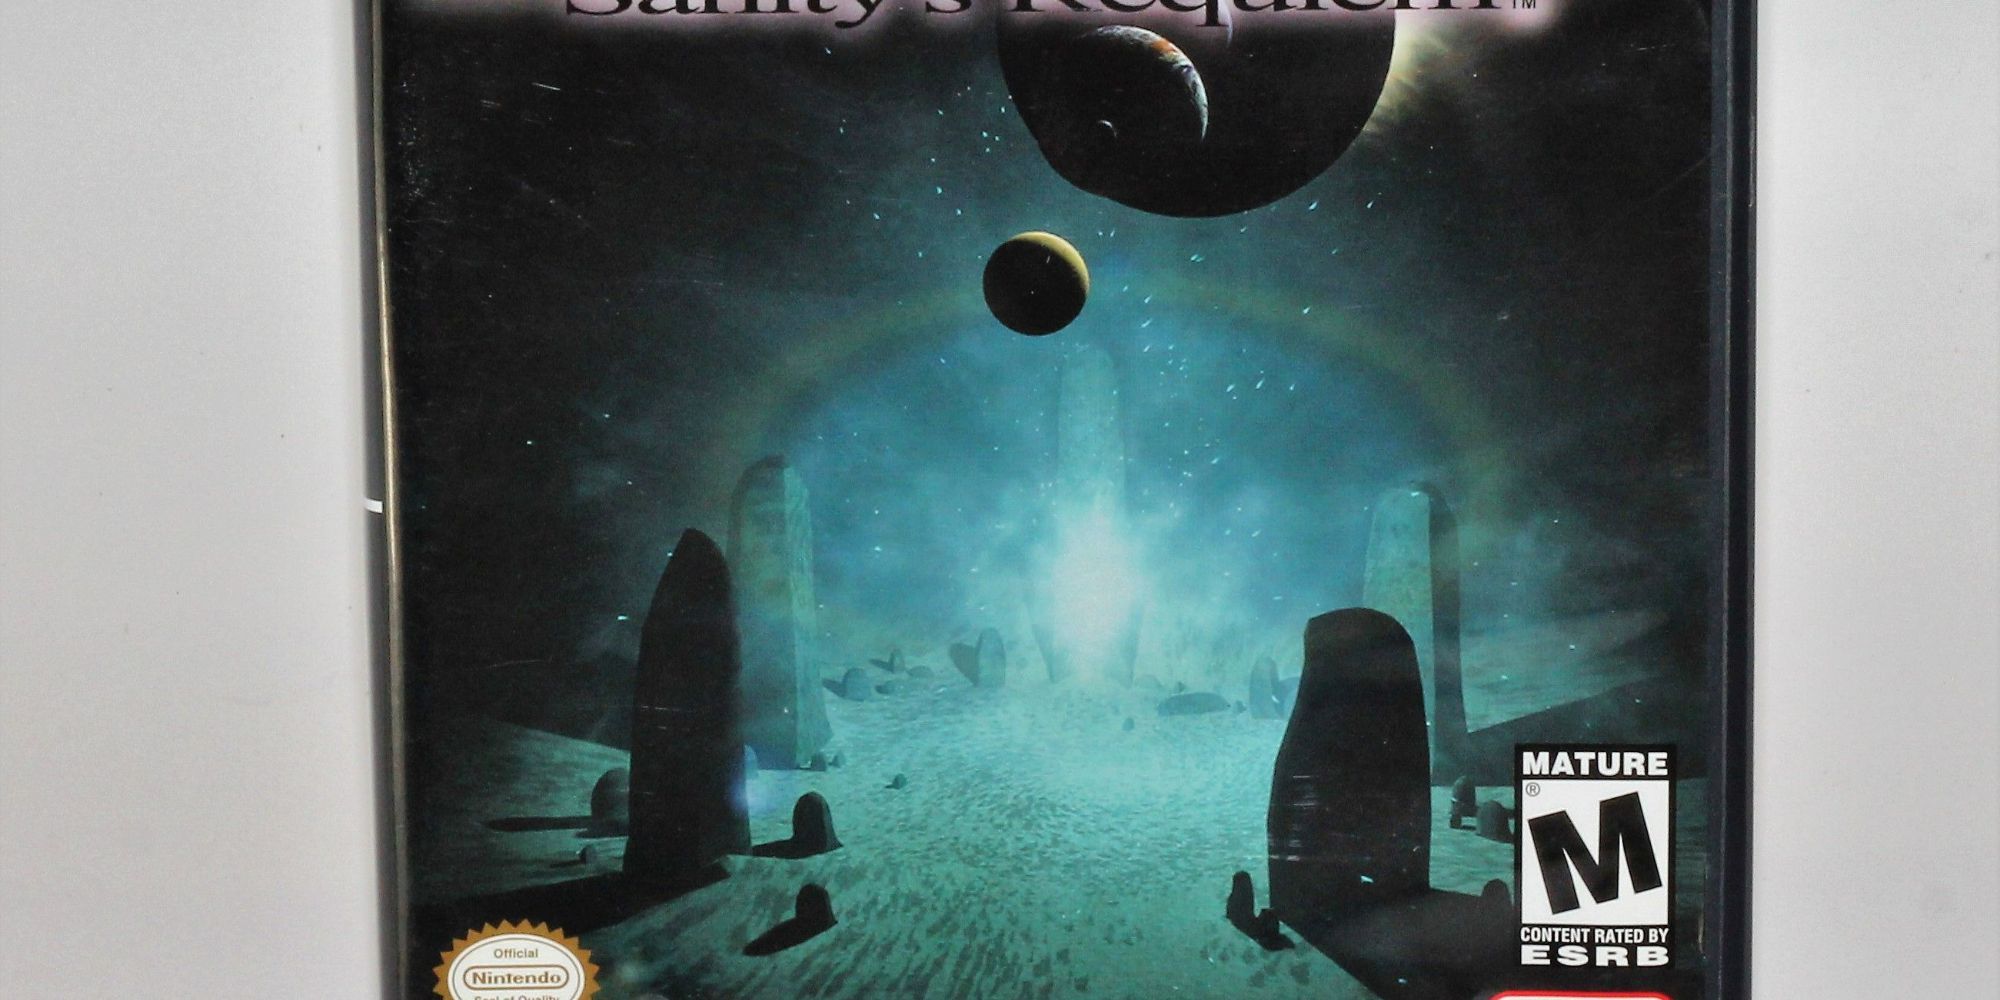 The cover of Eternal Darkness: Sanity's Requiem